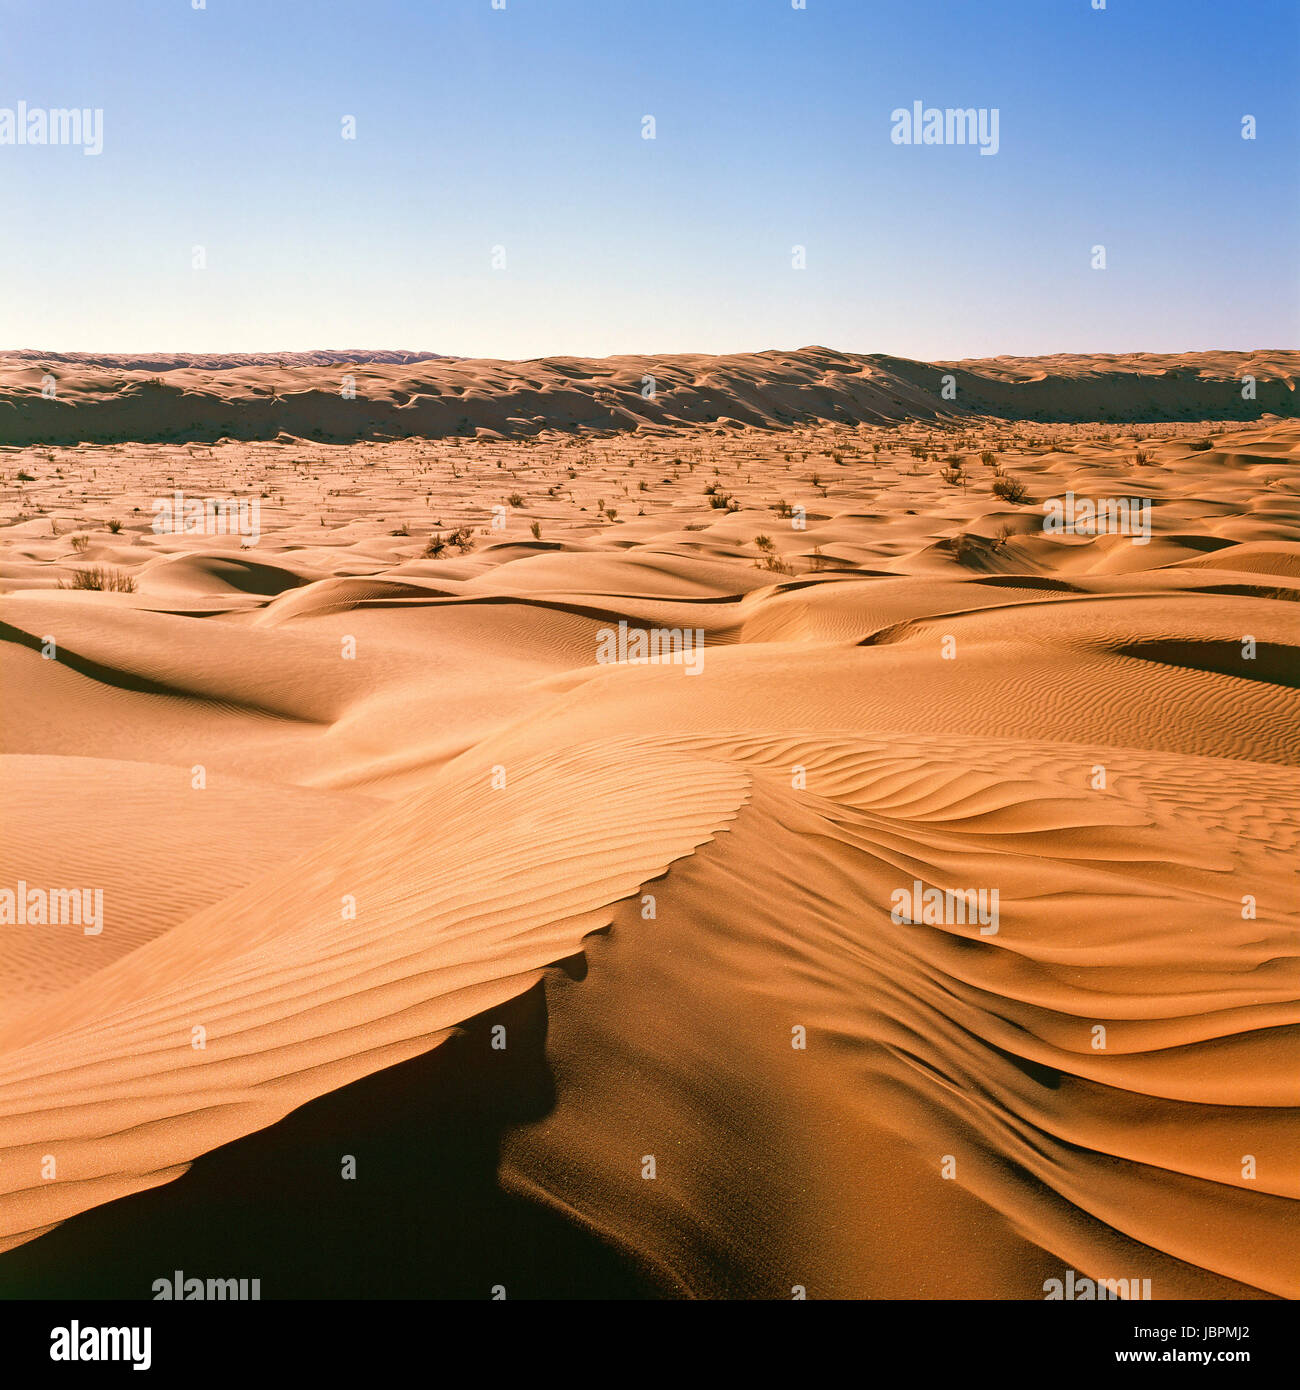 dunes picturesque Stock Photo